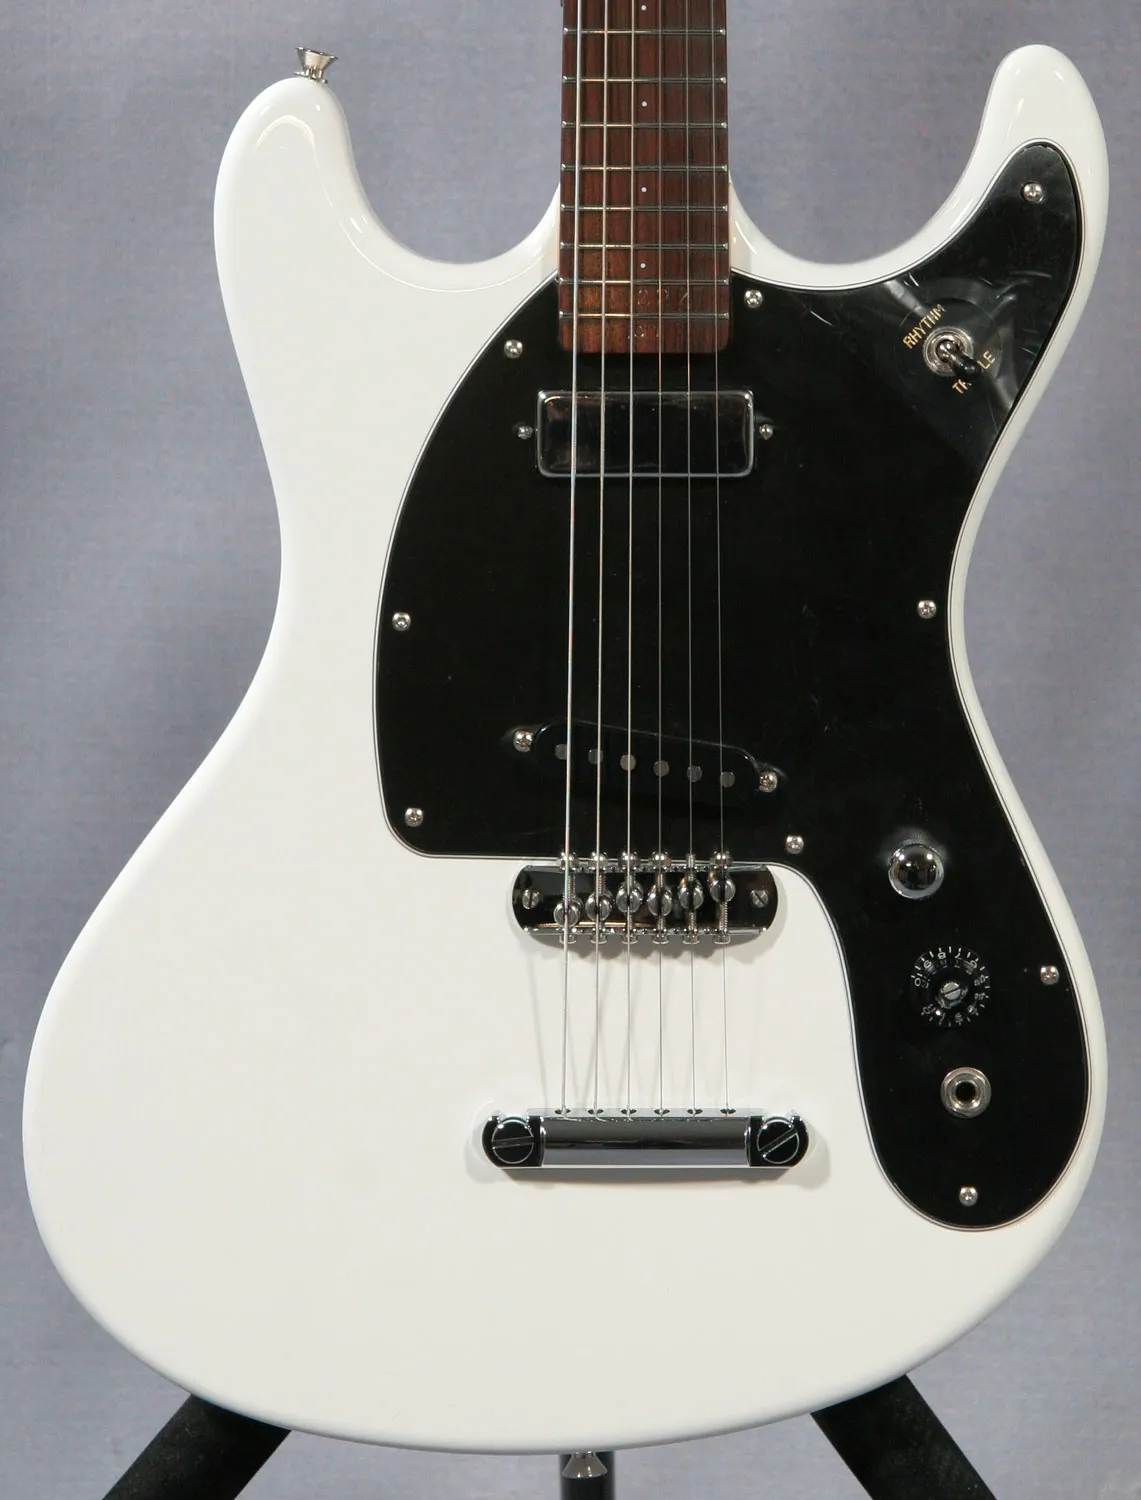 Rare 1966 Ventures Johnny Ramone Mark II Chitarra elettrica bianca Tune-A-Matic e Stop Tailpiece 2 Pickup single coil Pickguard bianco